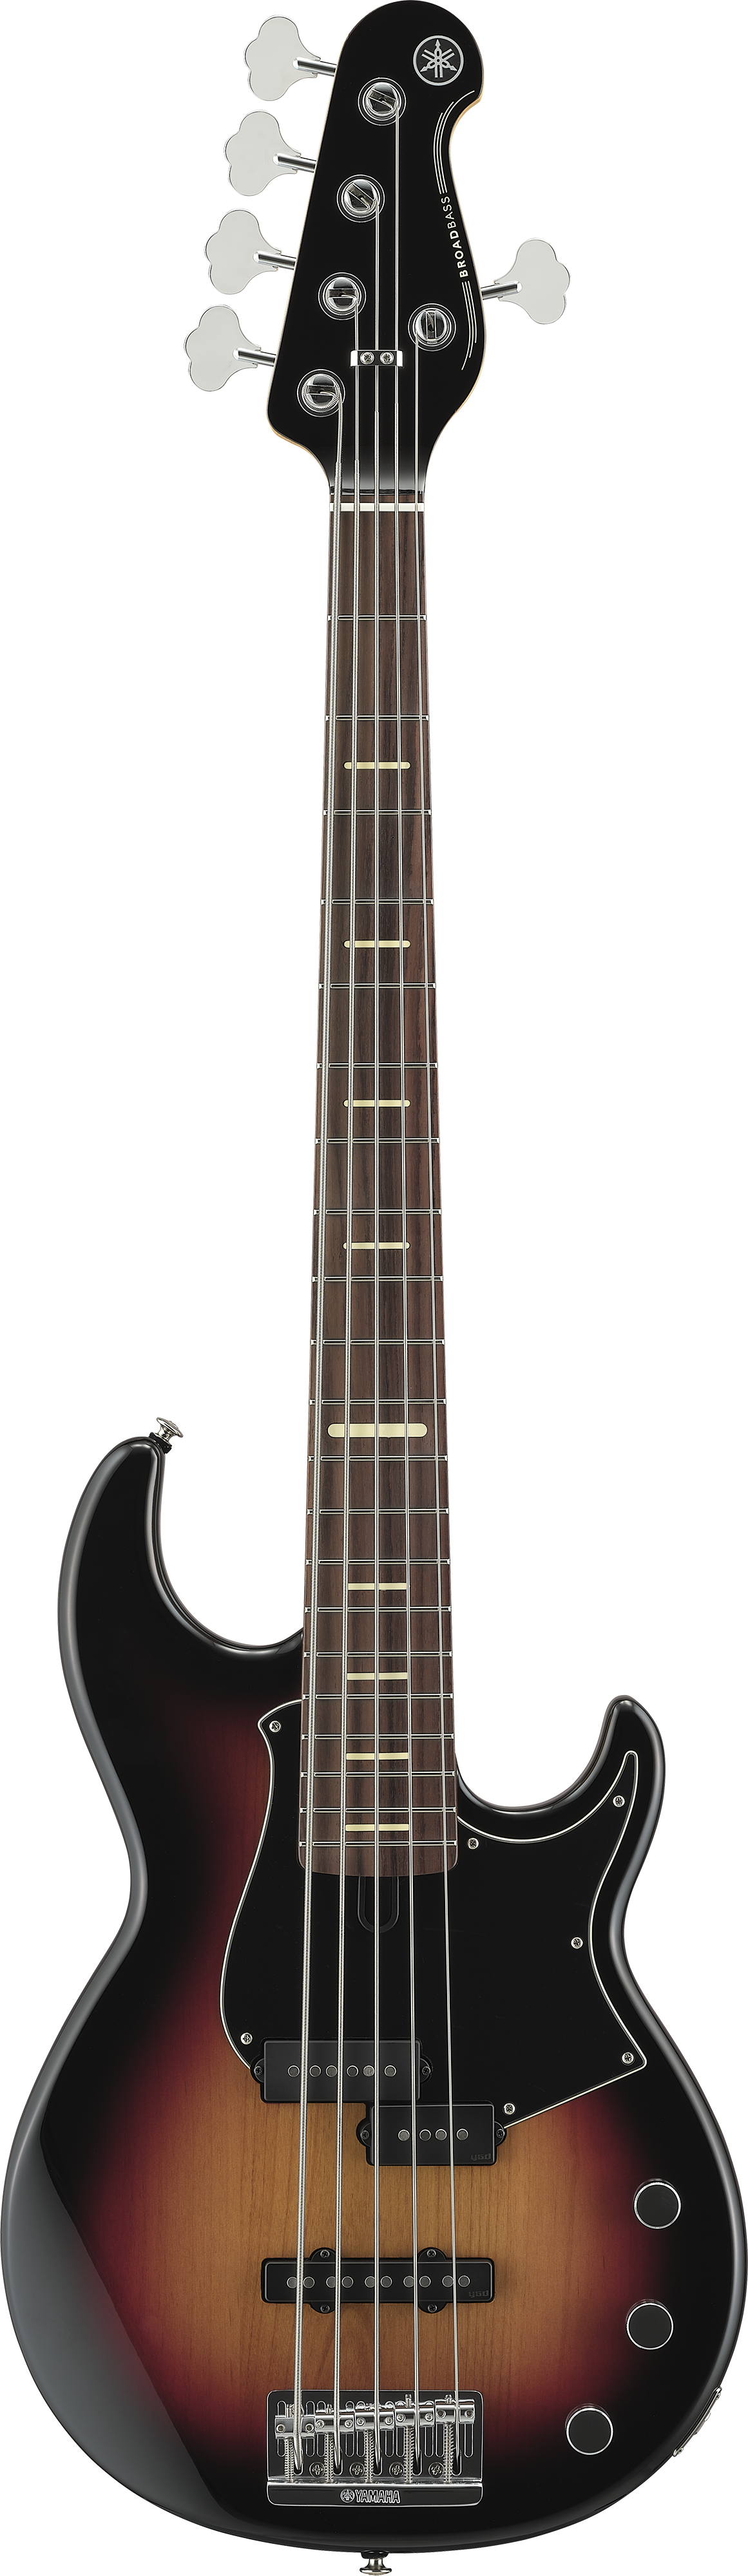 Yamaha BBP35II 5-String Electric Bass Guitar w/Hard Case - Made In Japan